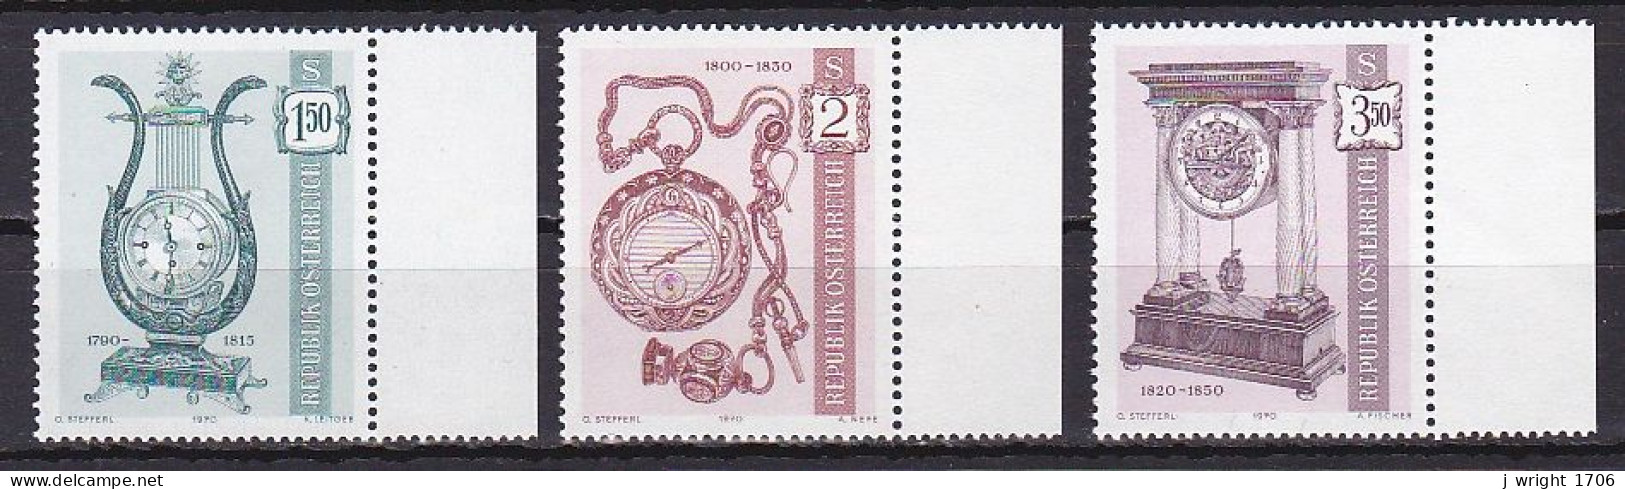 Austria, 1970, Antique Clocks 2nd Issue, Set, MNH - Unused Stamps